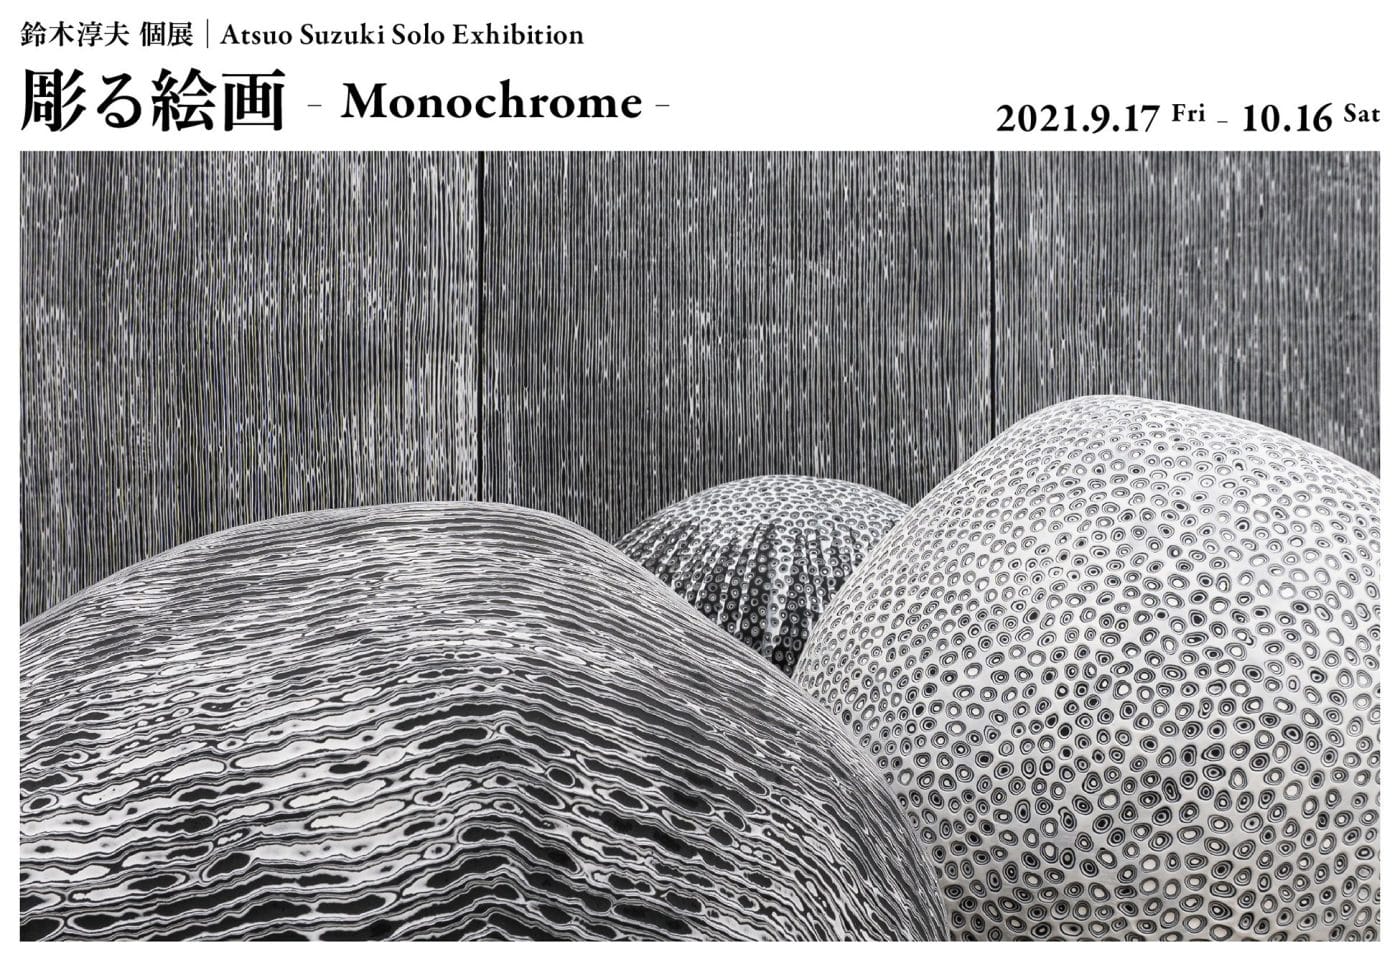 TEZUKAYAMA GALLERYにて、鈴木淳夫個展「彫る絵画 – Monochrome -」。パネルの上に塗り重ねた絵具の層を彫刻刀で削り出すことで図柄を描く作家が、白黒のモノクロームに統一した作品群を展示。